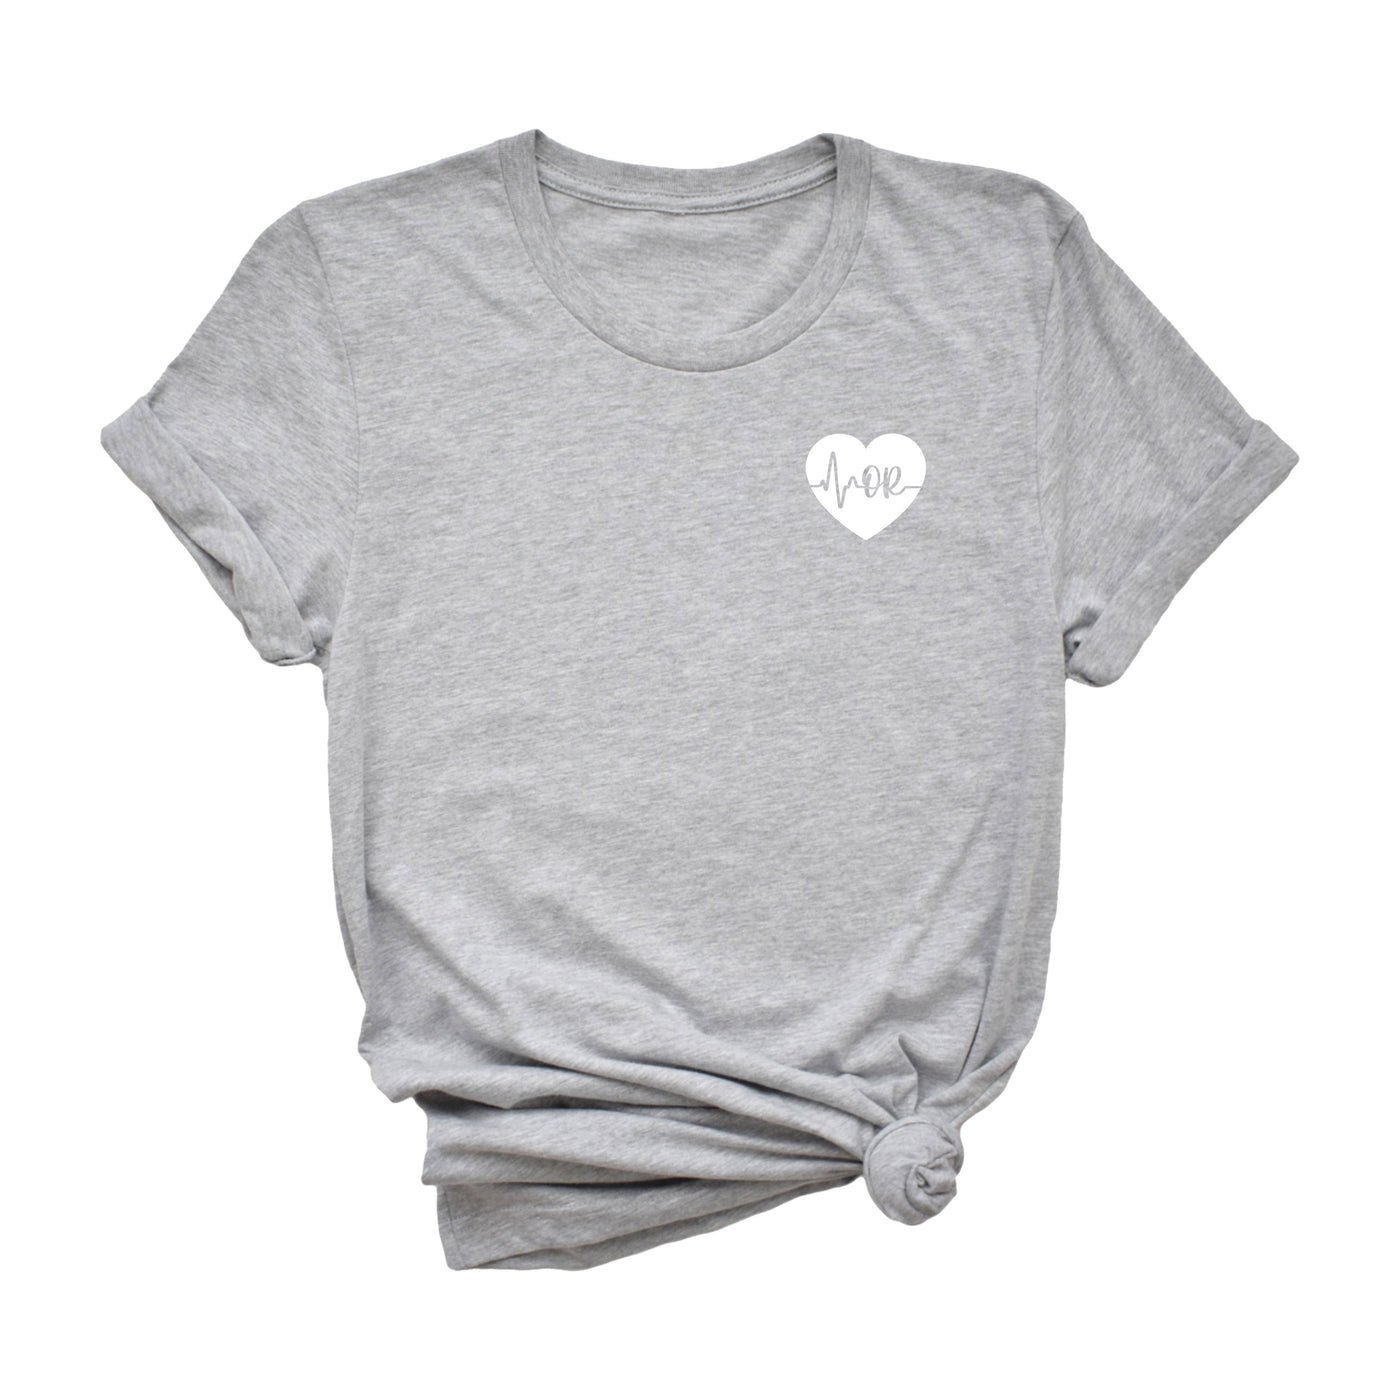 OR ECG Heart - Shirt